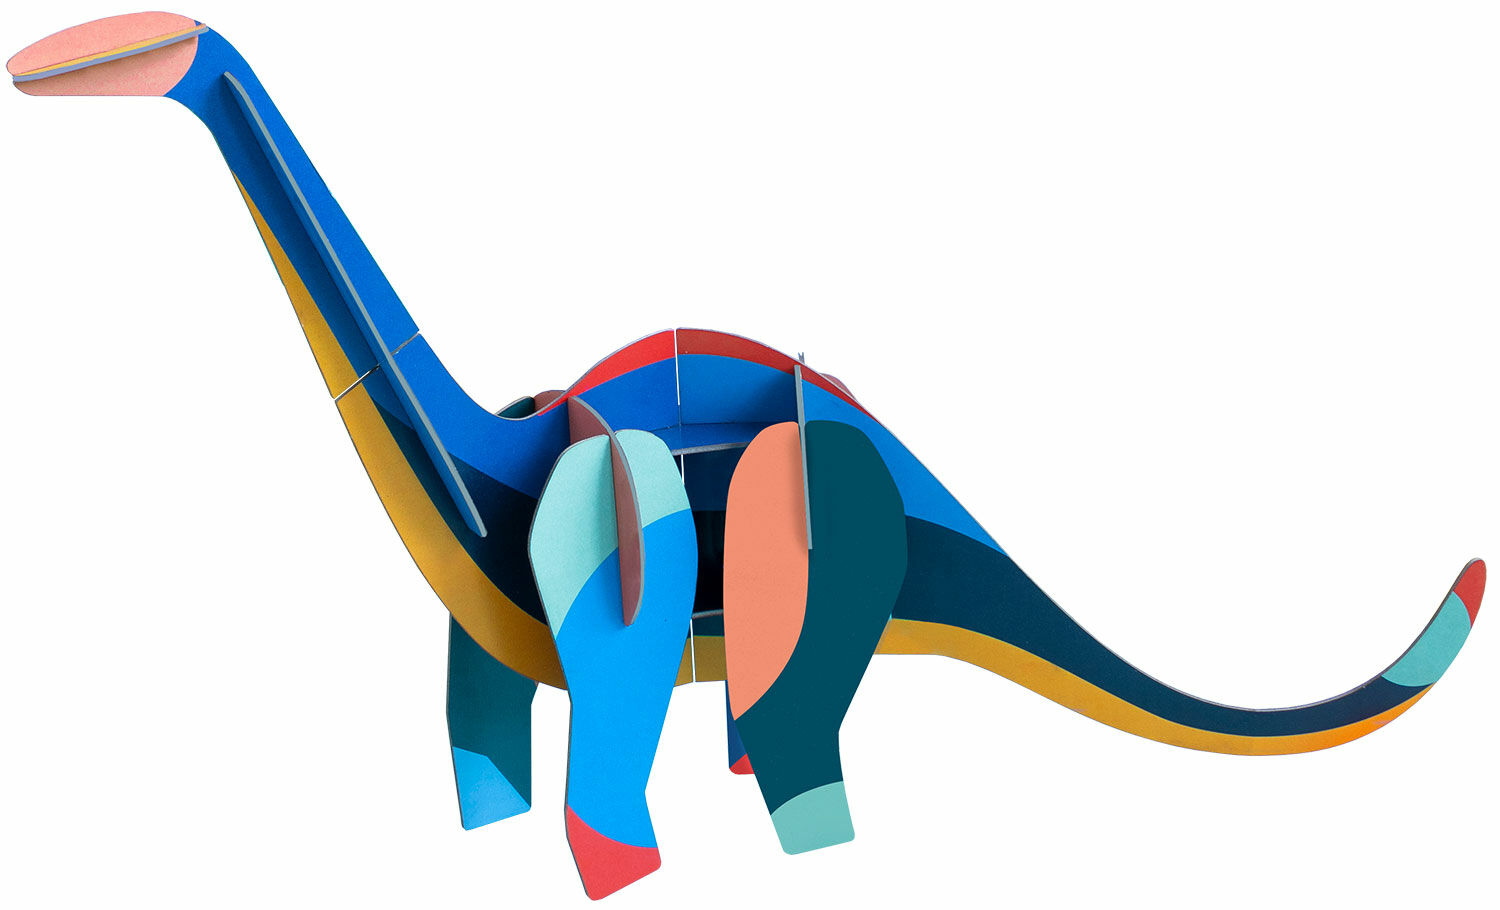 3D-Objekt "Giant Diplodocus" aus recyceltem Karton, DIY von studio ROOF